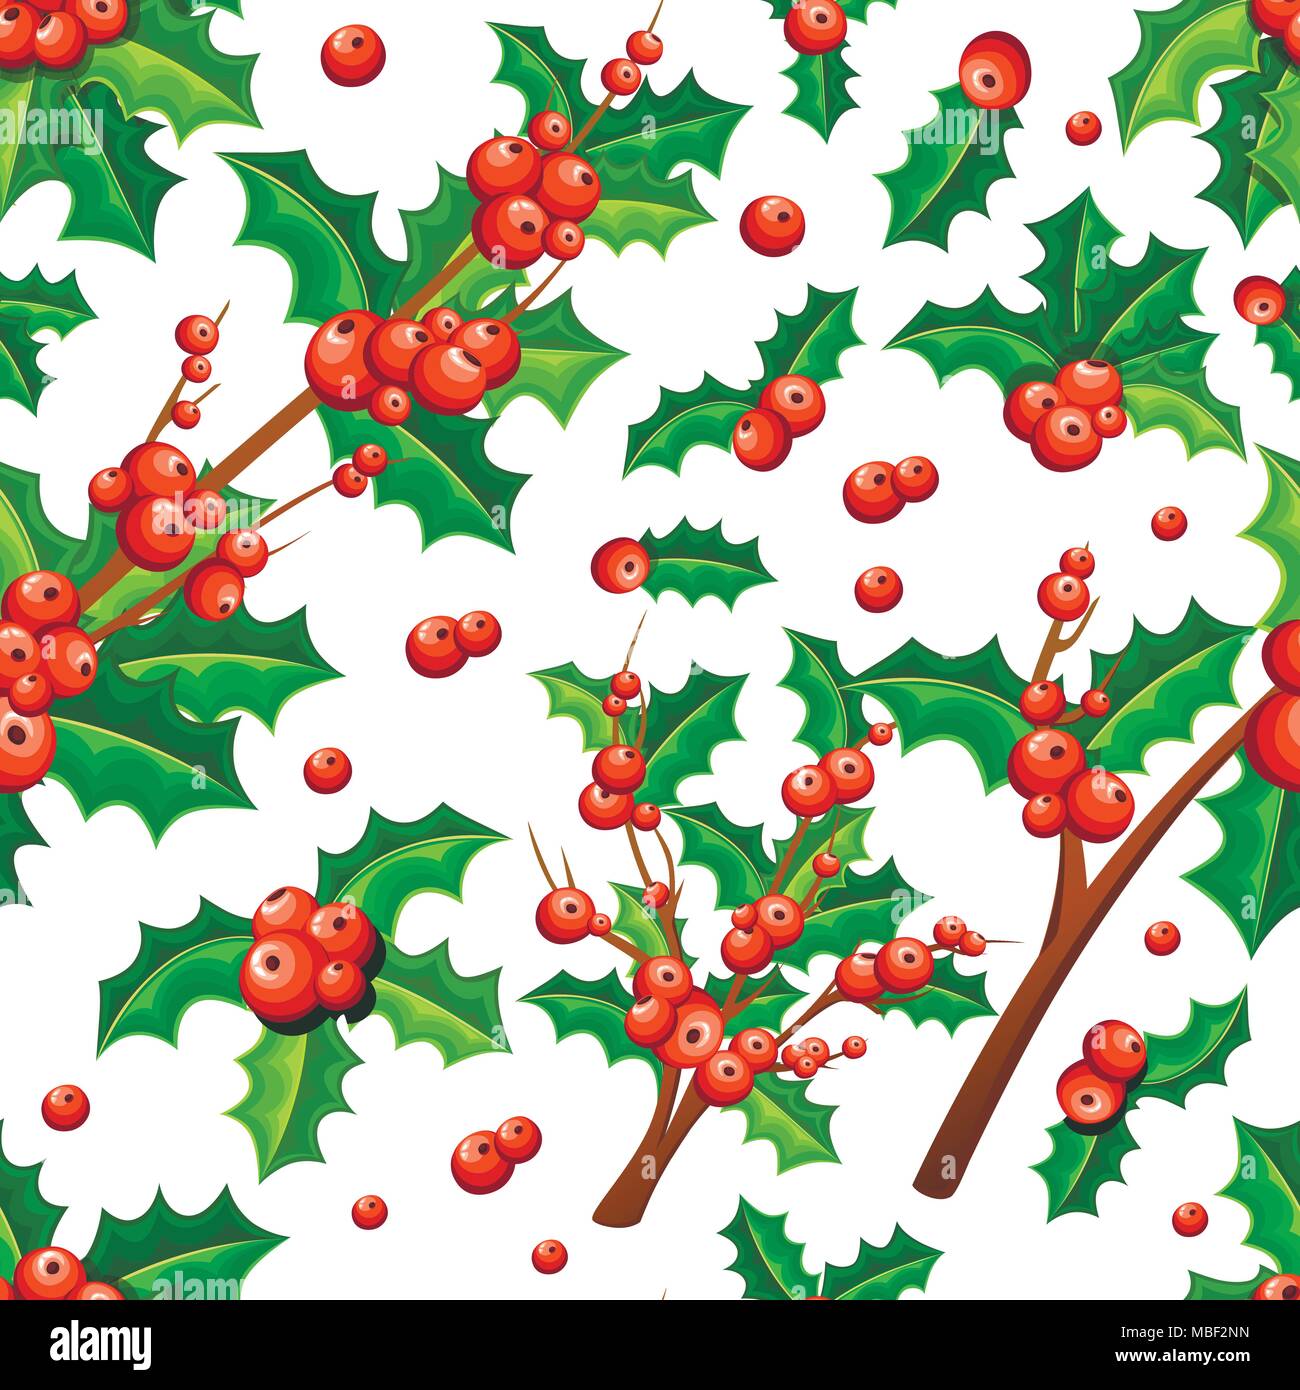 Seamless pattern of Christmas mistletoe. Branches of mistletoe with green leaves. Cartoon style design. Vector illustration on white background. Stock Vector